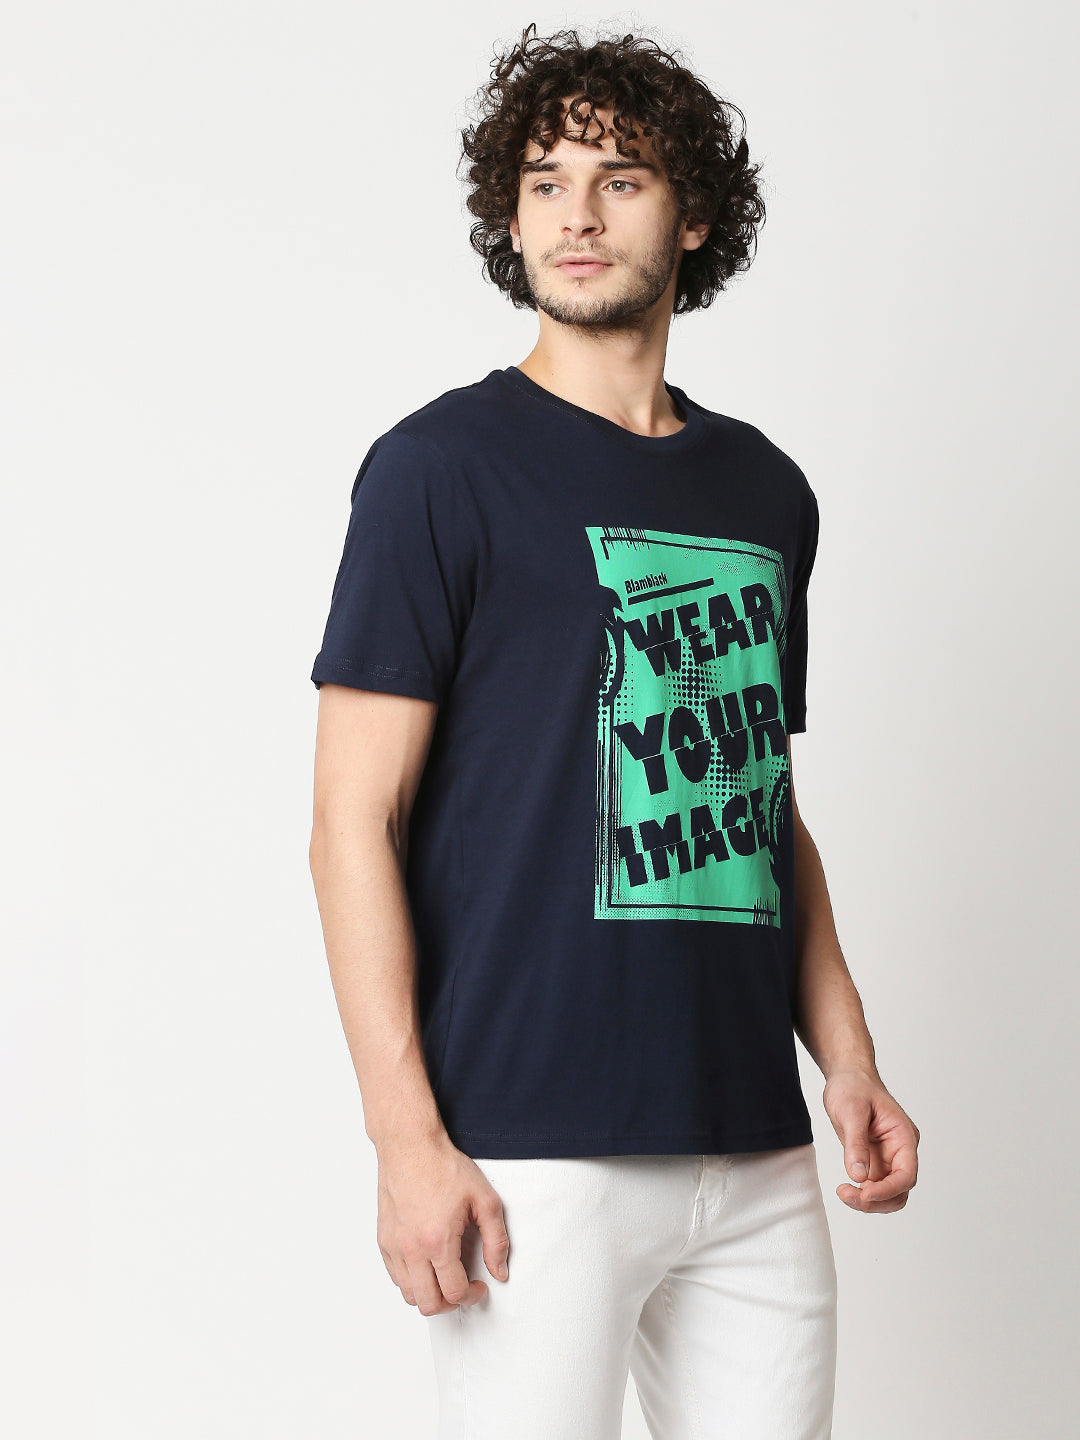 Buy Men's Comfort fit Navy Blue Chest print T-shirt.